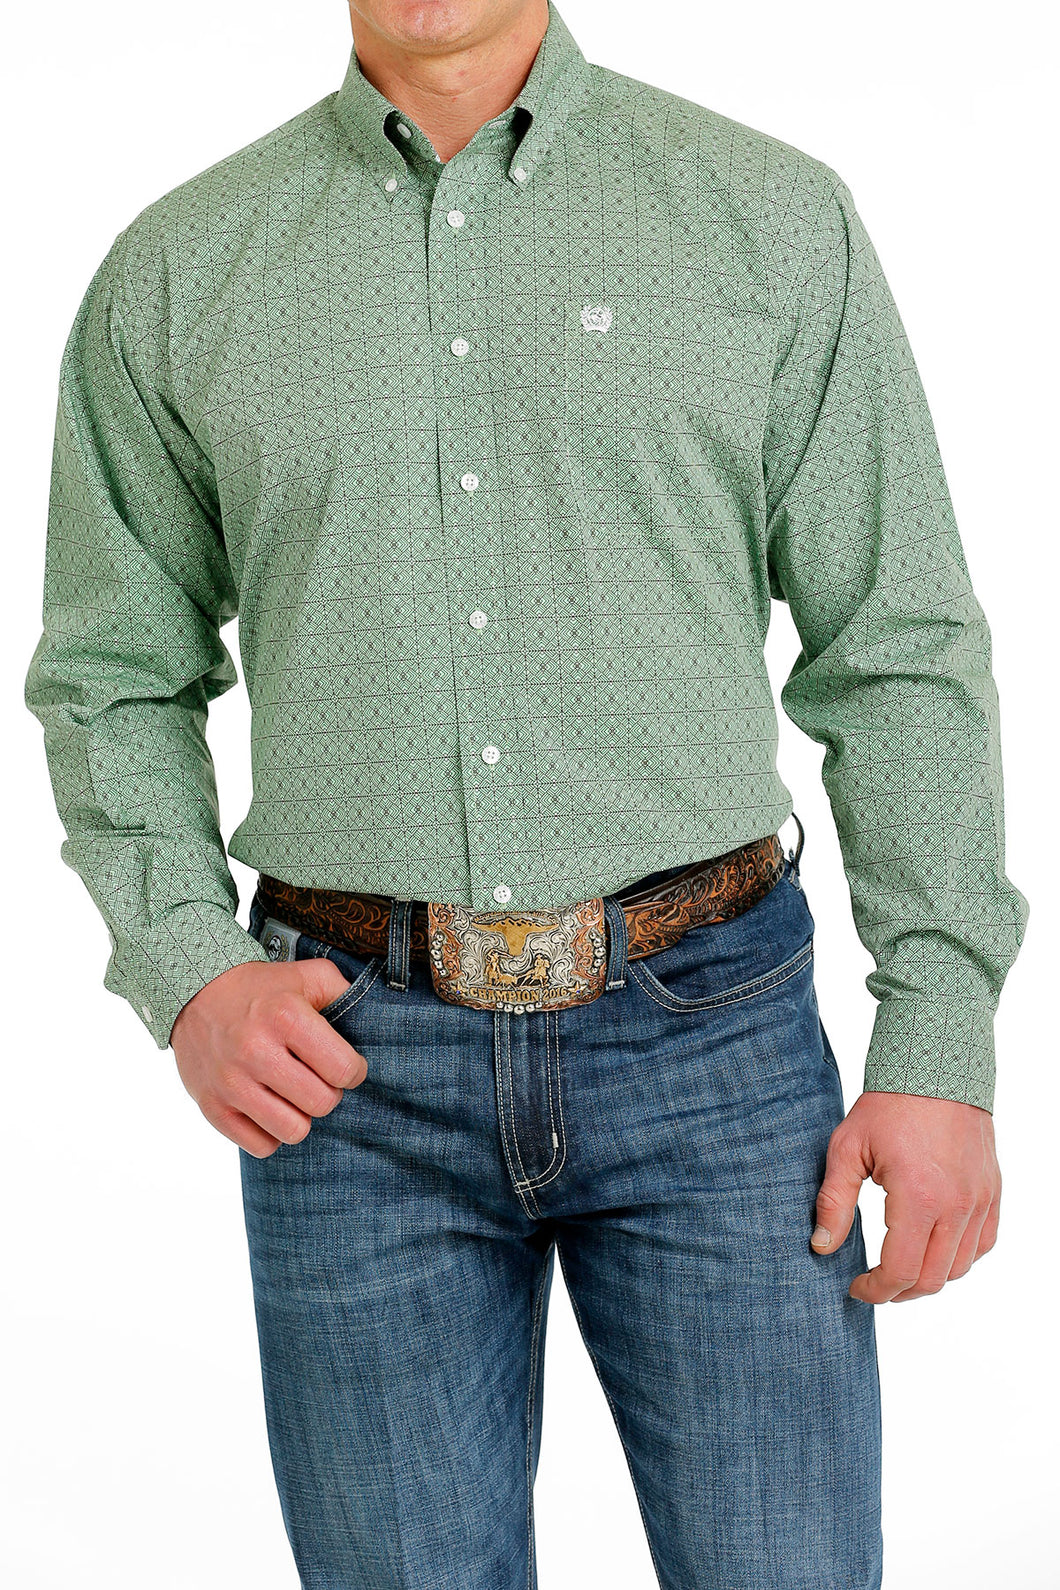 Pard's Western Shop Cinch Green Geometric Print Button-Down Shirt for Men